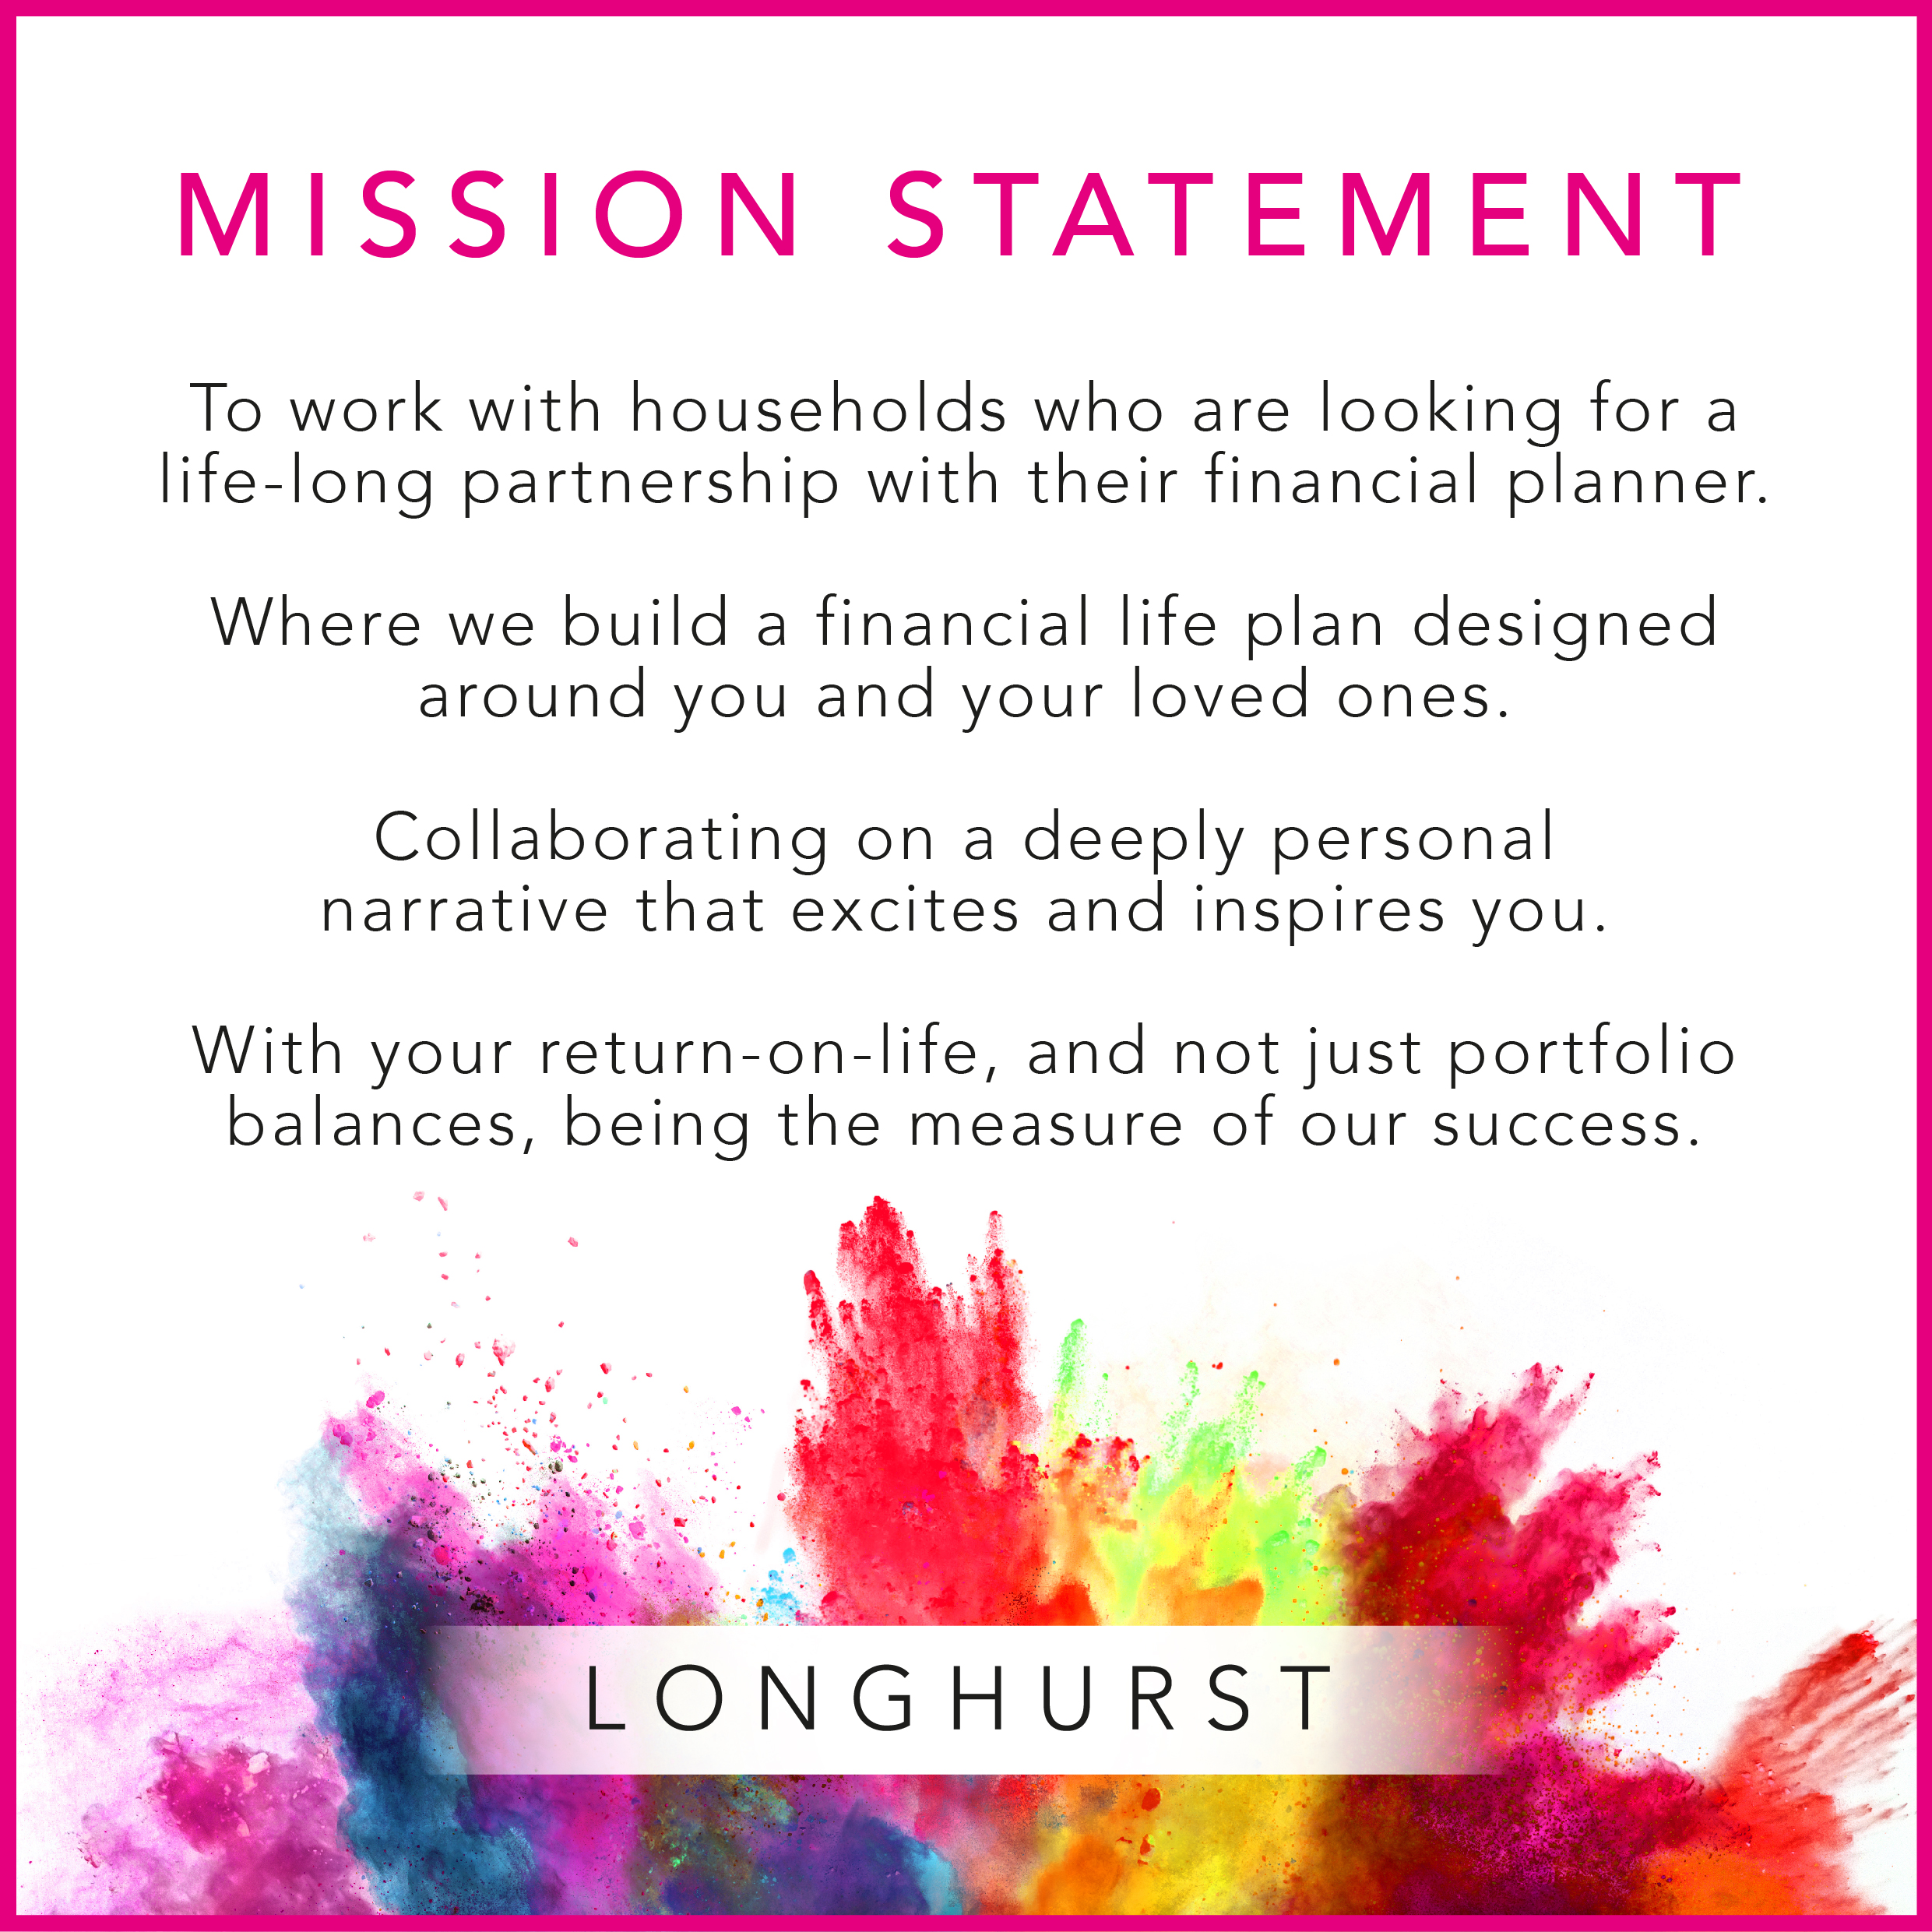 Longhurst - Mission Statement